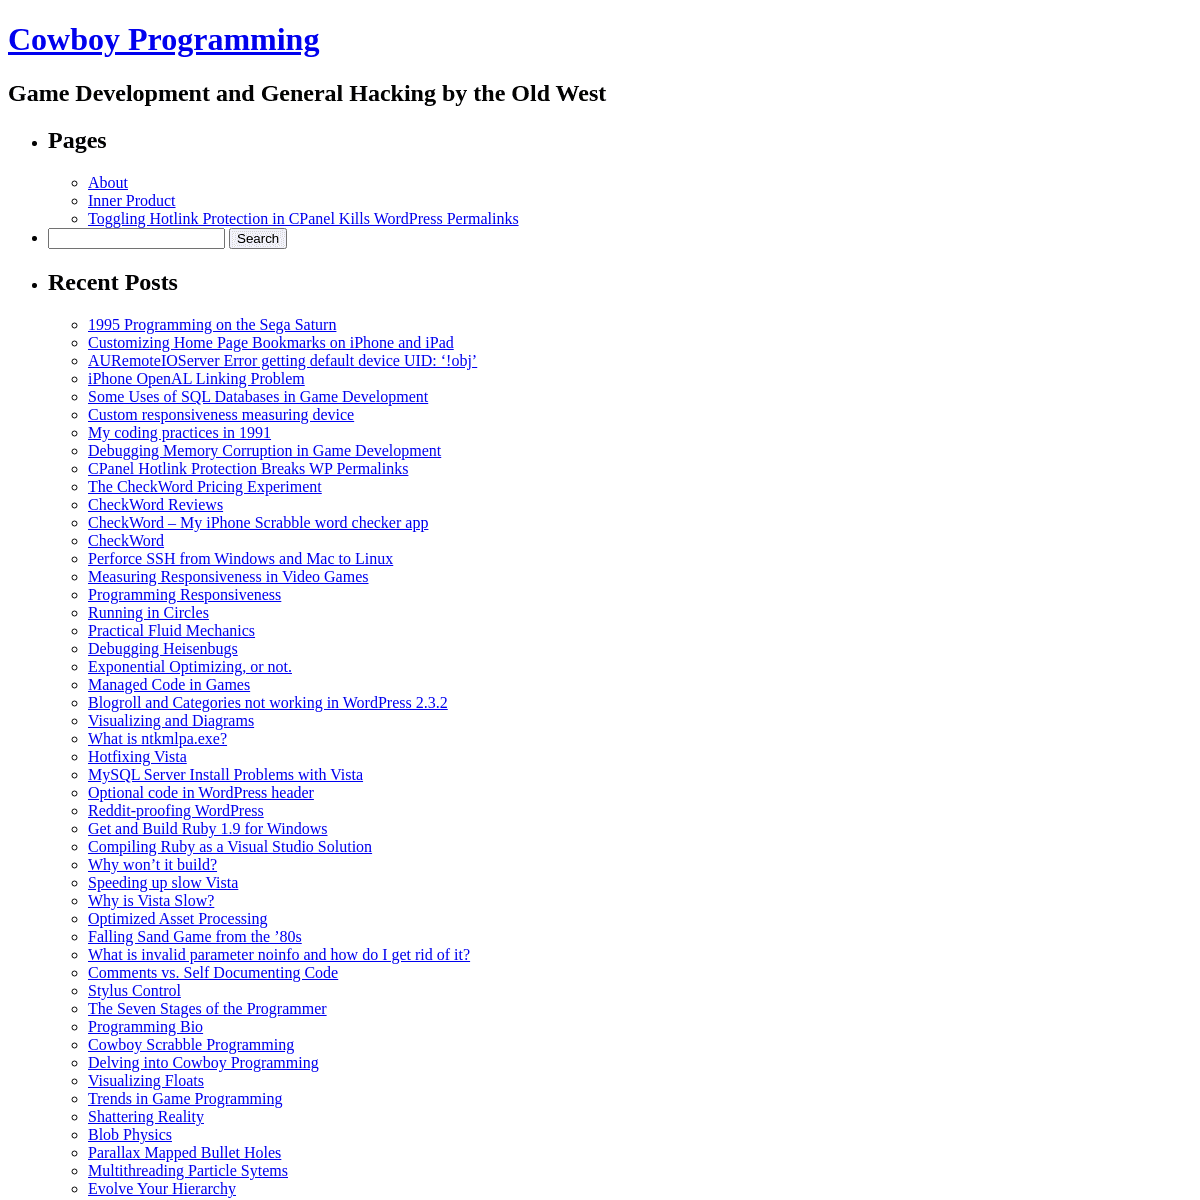 A complete backup of https://cowboyprogramming.com